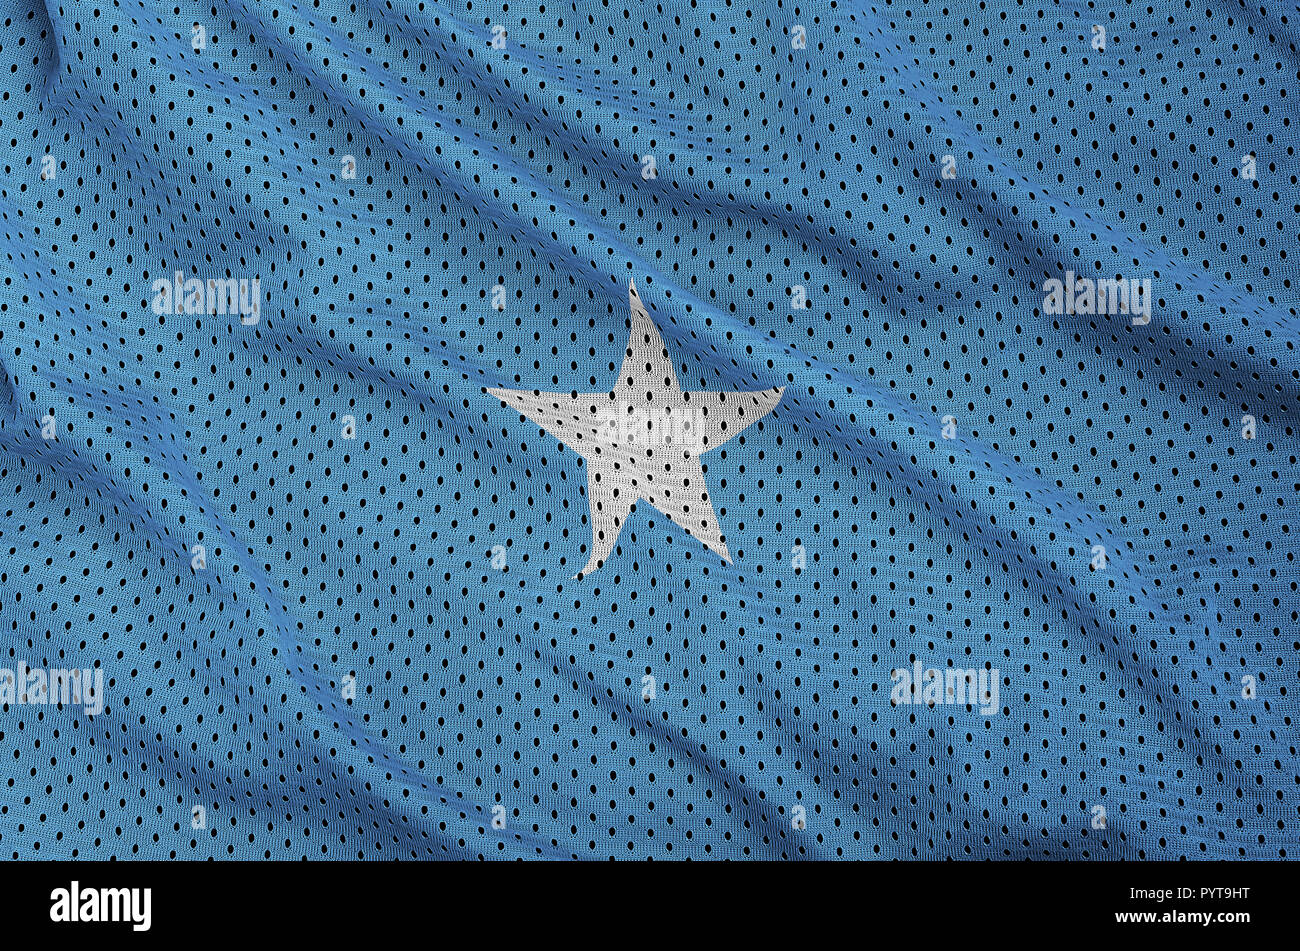 Sweden flag printed on a polyester nylon sportswear mesh fabric